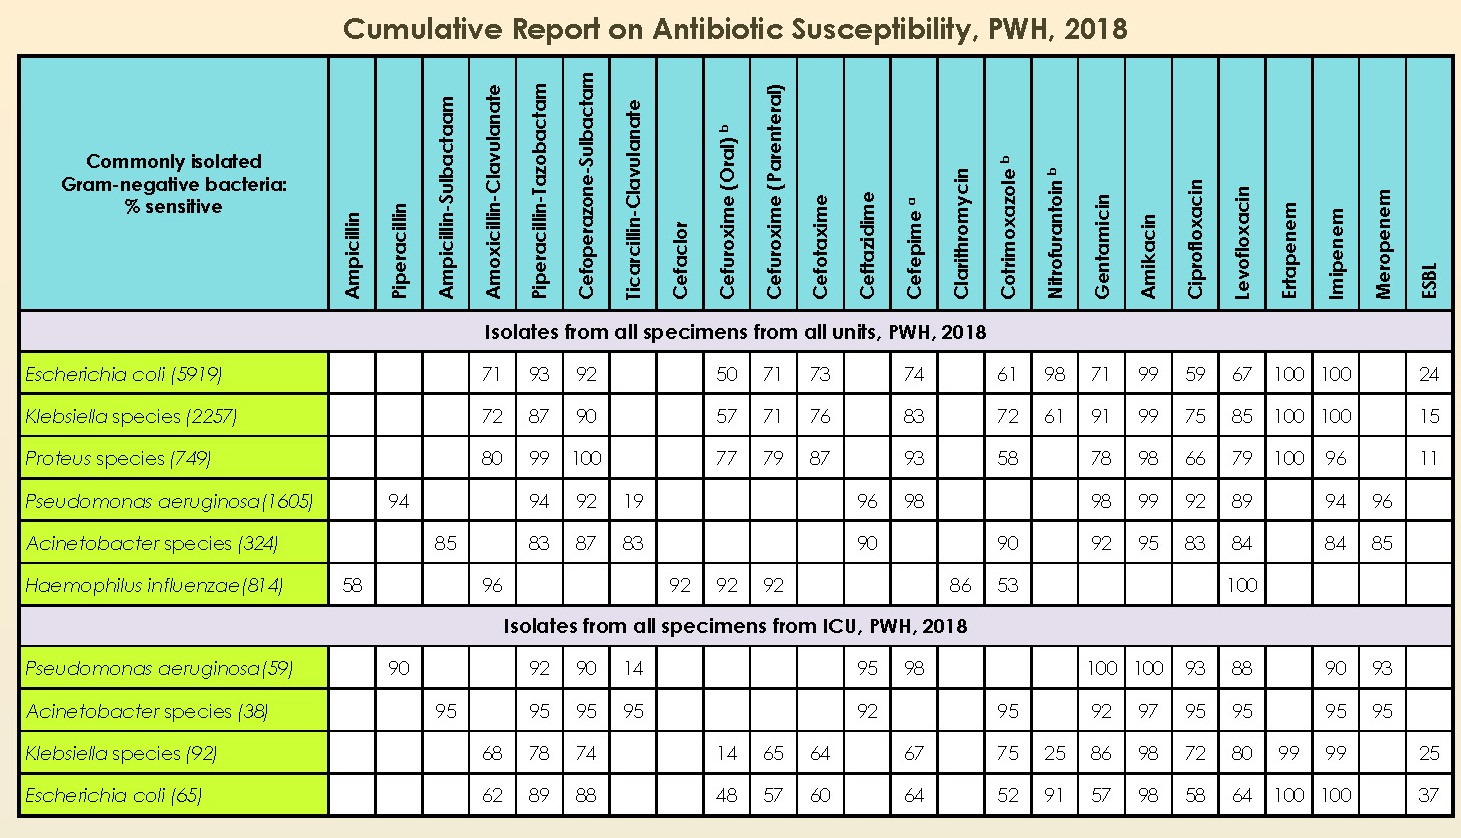 Table NTE-1. Antibiogram for Gram-negative bacterial isolates, PWH, 2018